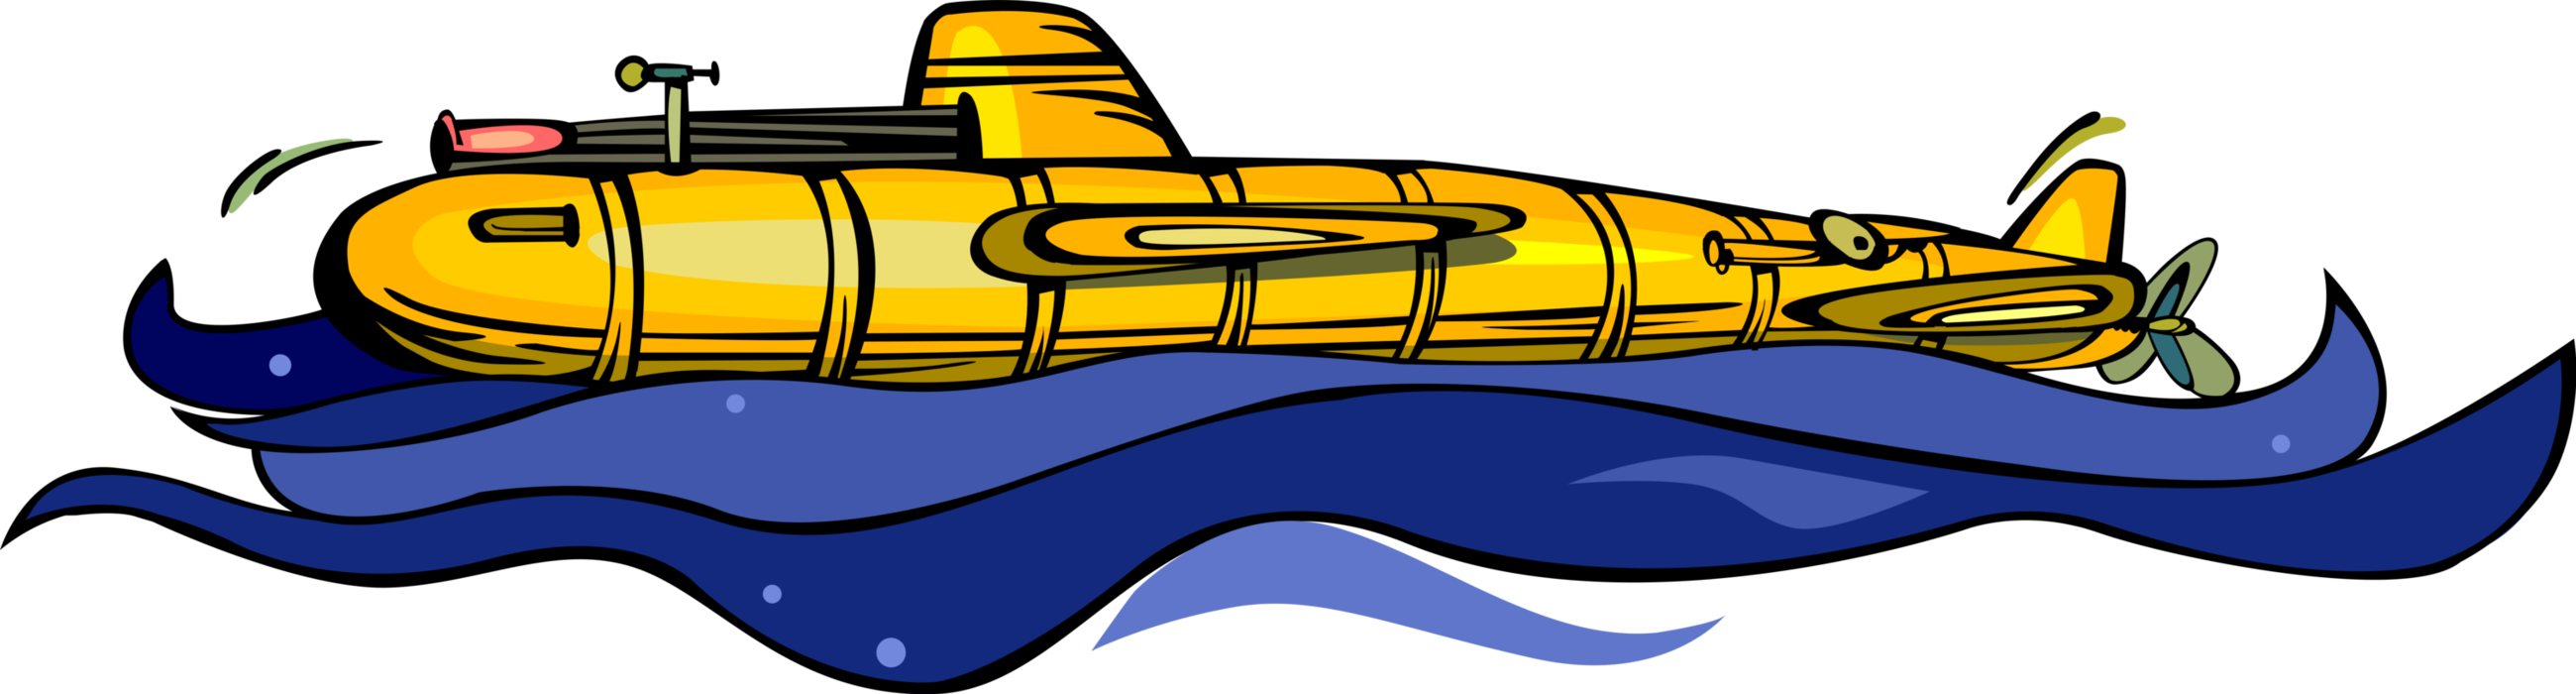 Vector Illustration Of Prototype Navy Submersible Under - Vector Illustration Of Prototype Navy Submersible Under (2600x700)